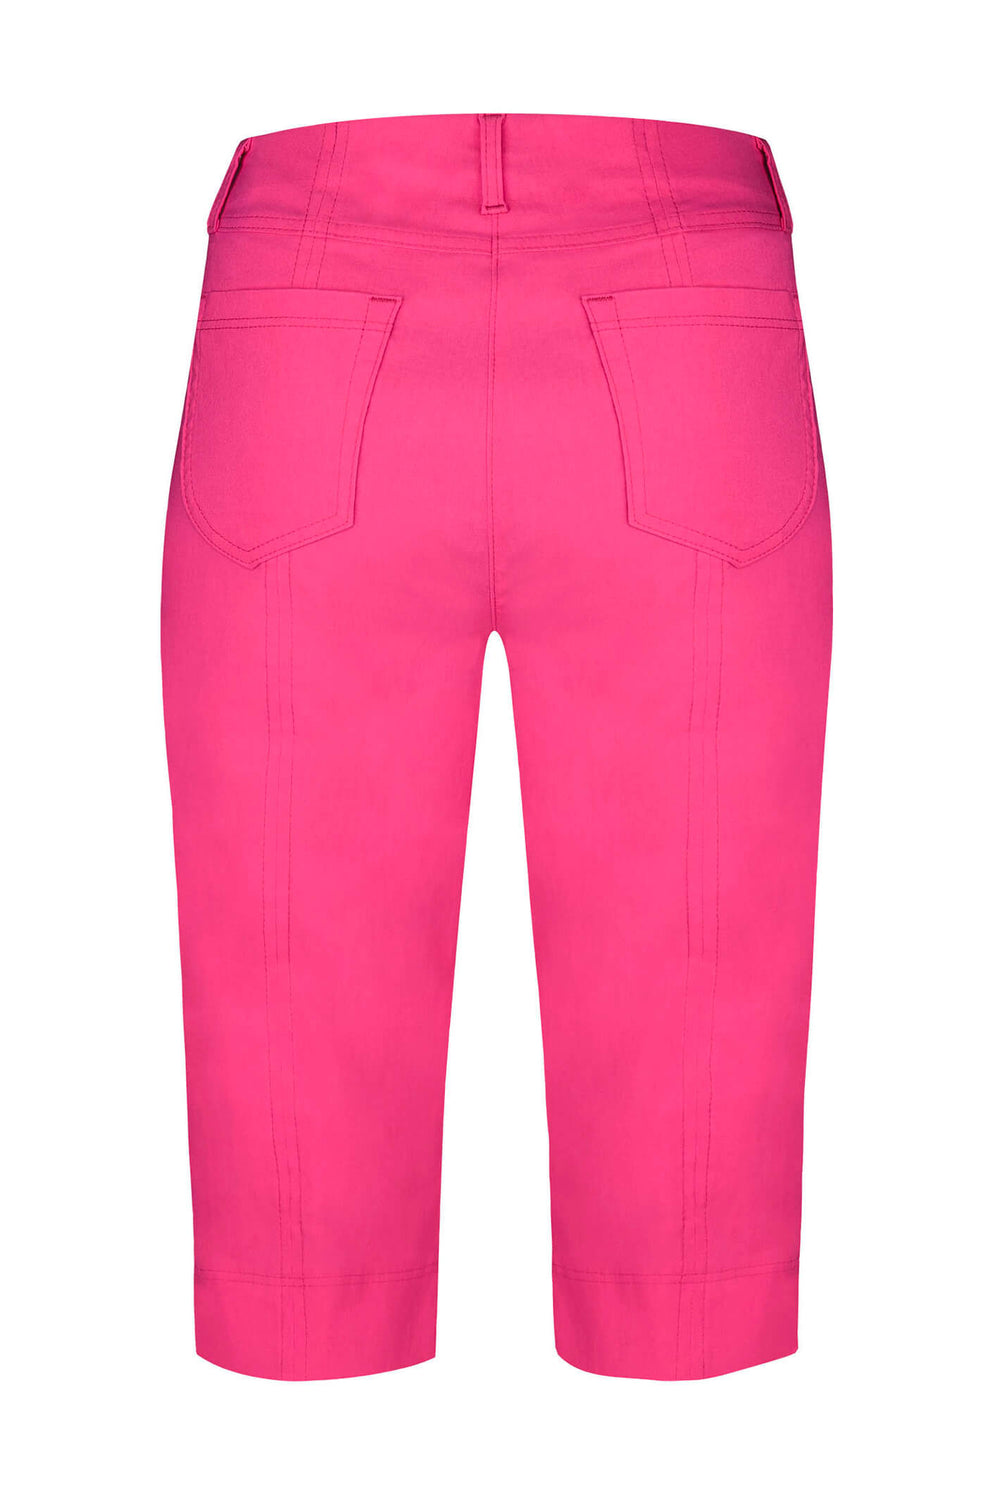 Robell Lexi 05 Cabaret Pink Knee Length Golf Shorts 52678 5499 - Olivia Grace Fashion